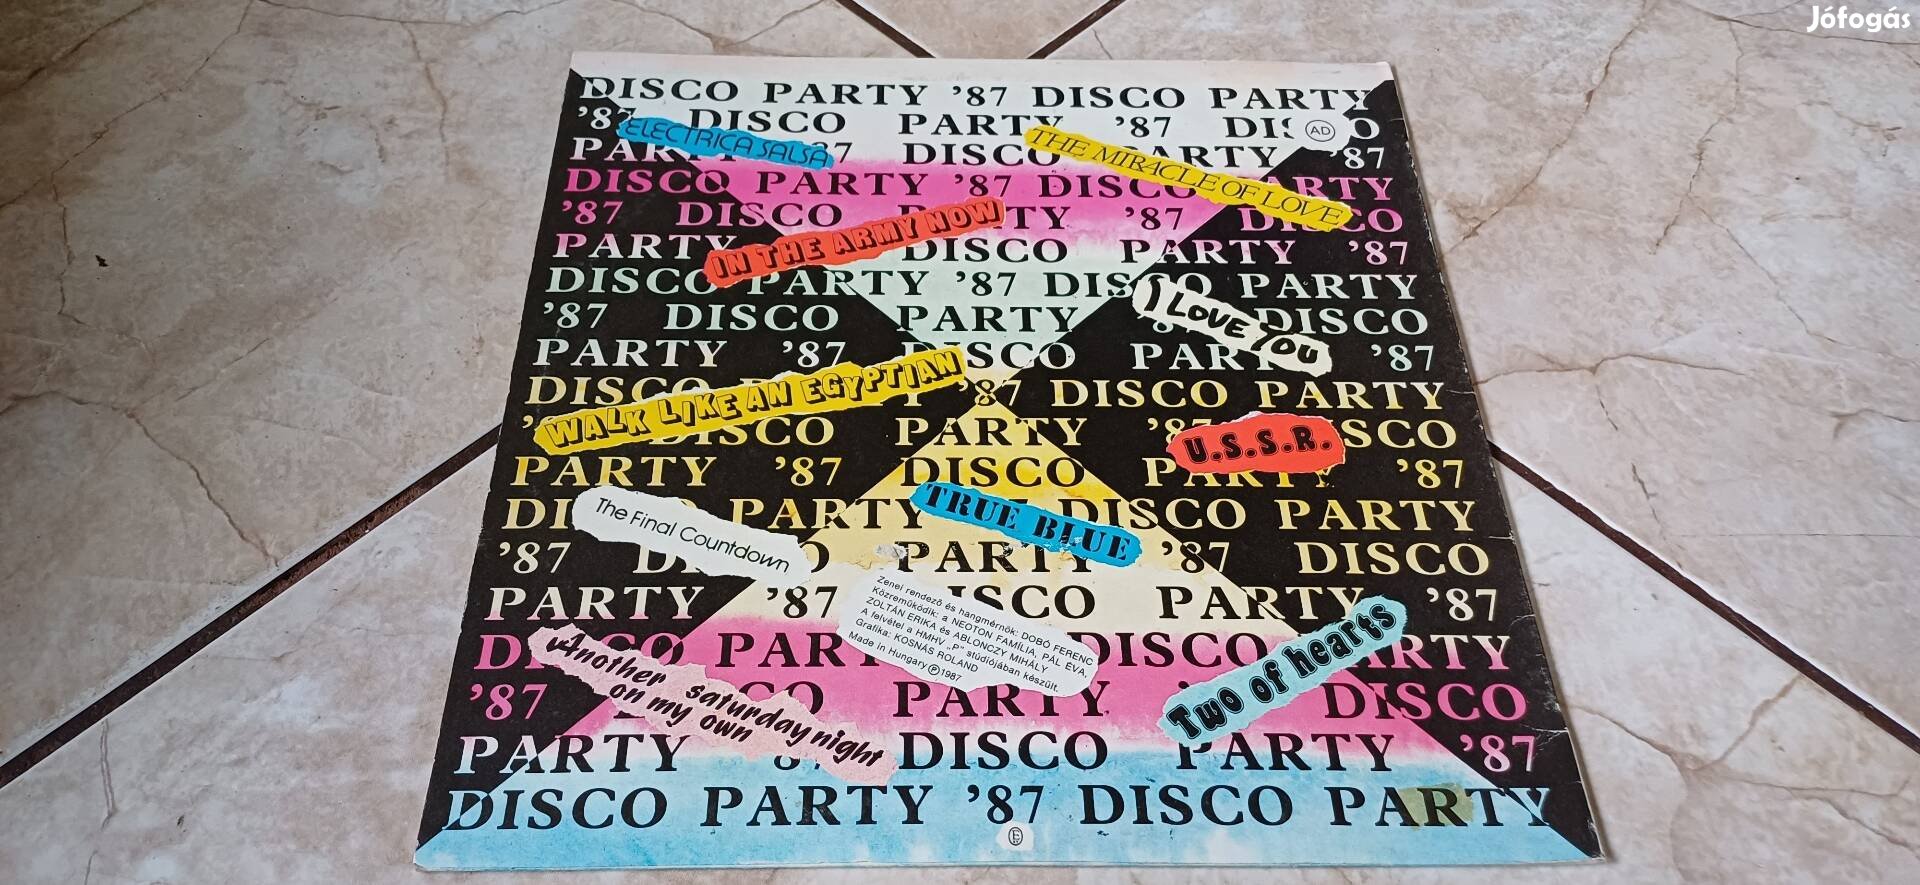 Disci Party bakelit lemez